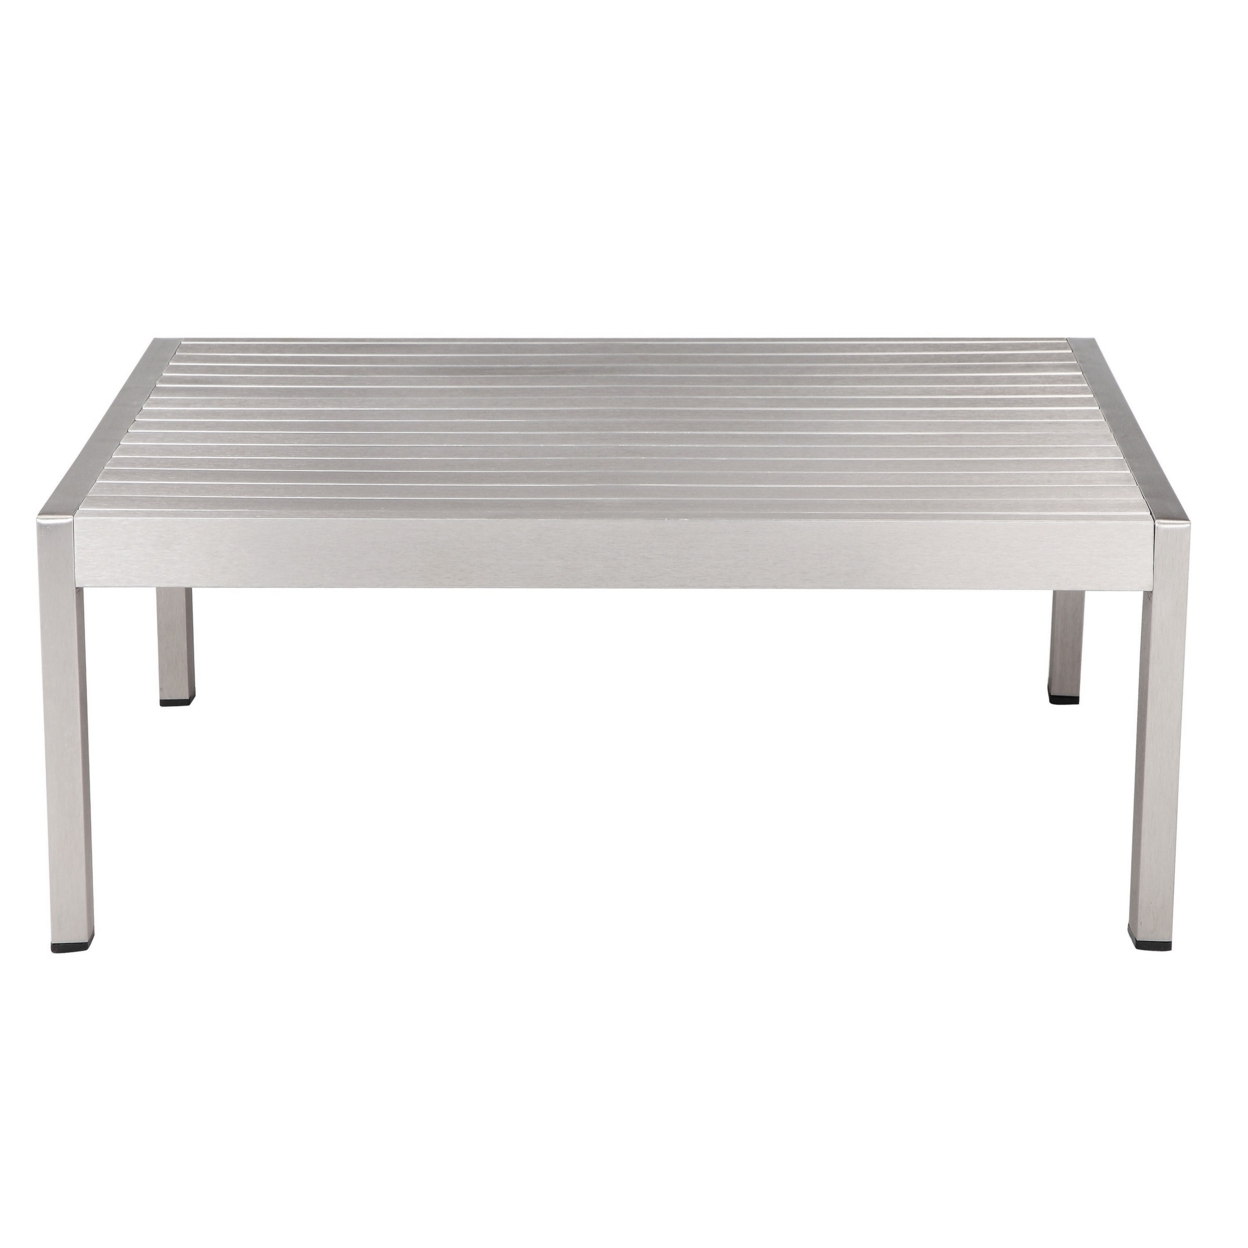 Cilo 32 Inch Outdoor Coffee Table, Gray Aluminum Frame, Rectangular Design- Saltoro Sherpi